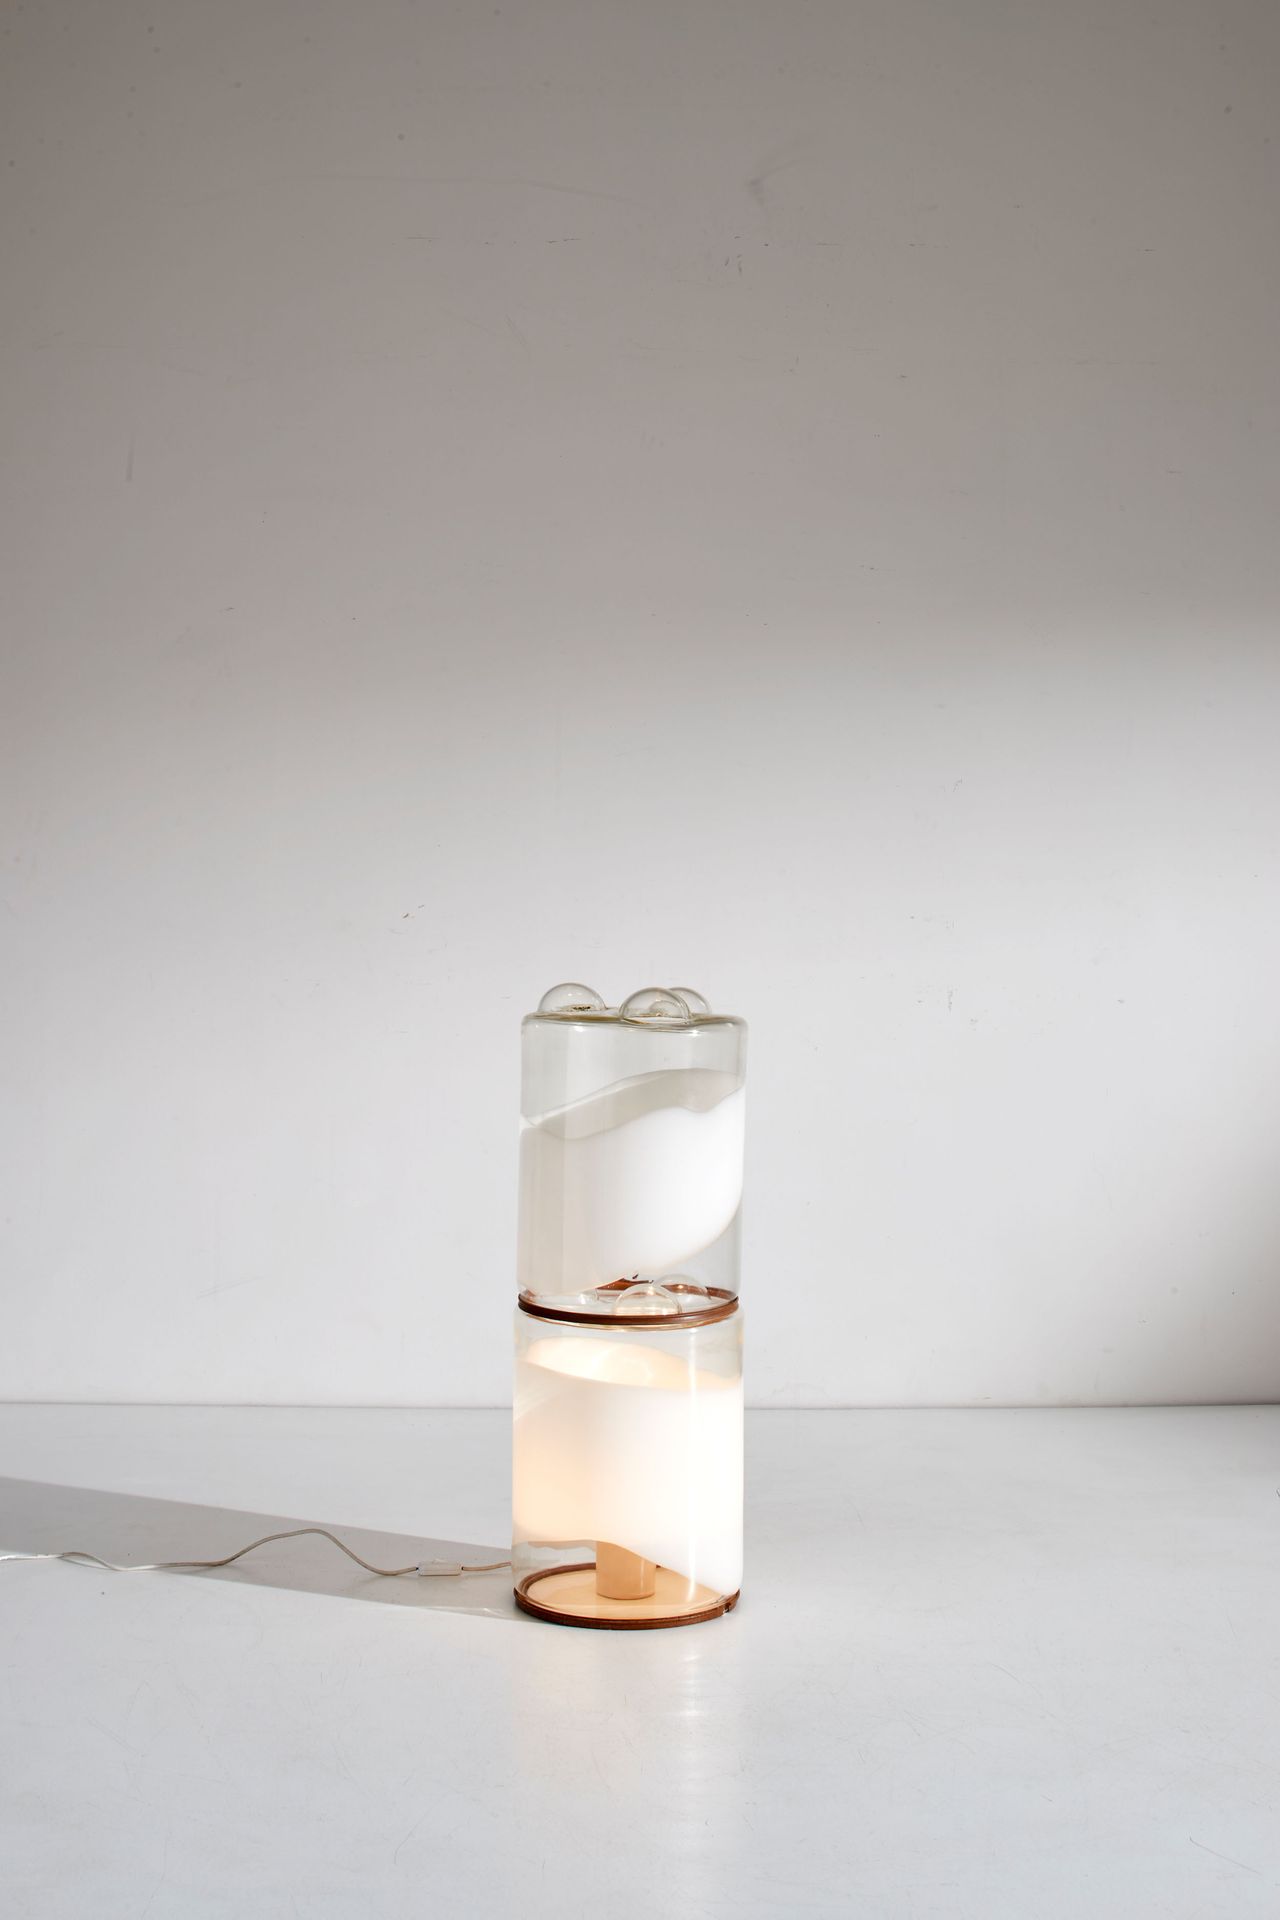 Giusto Toso 落地灯。透明玻璃元素与牛奶玻璃incalmo带。Production Fratelli Toso 1970年代
cm 85x32
A F&hellip;